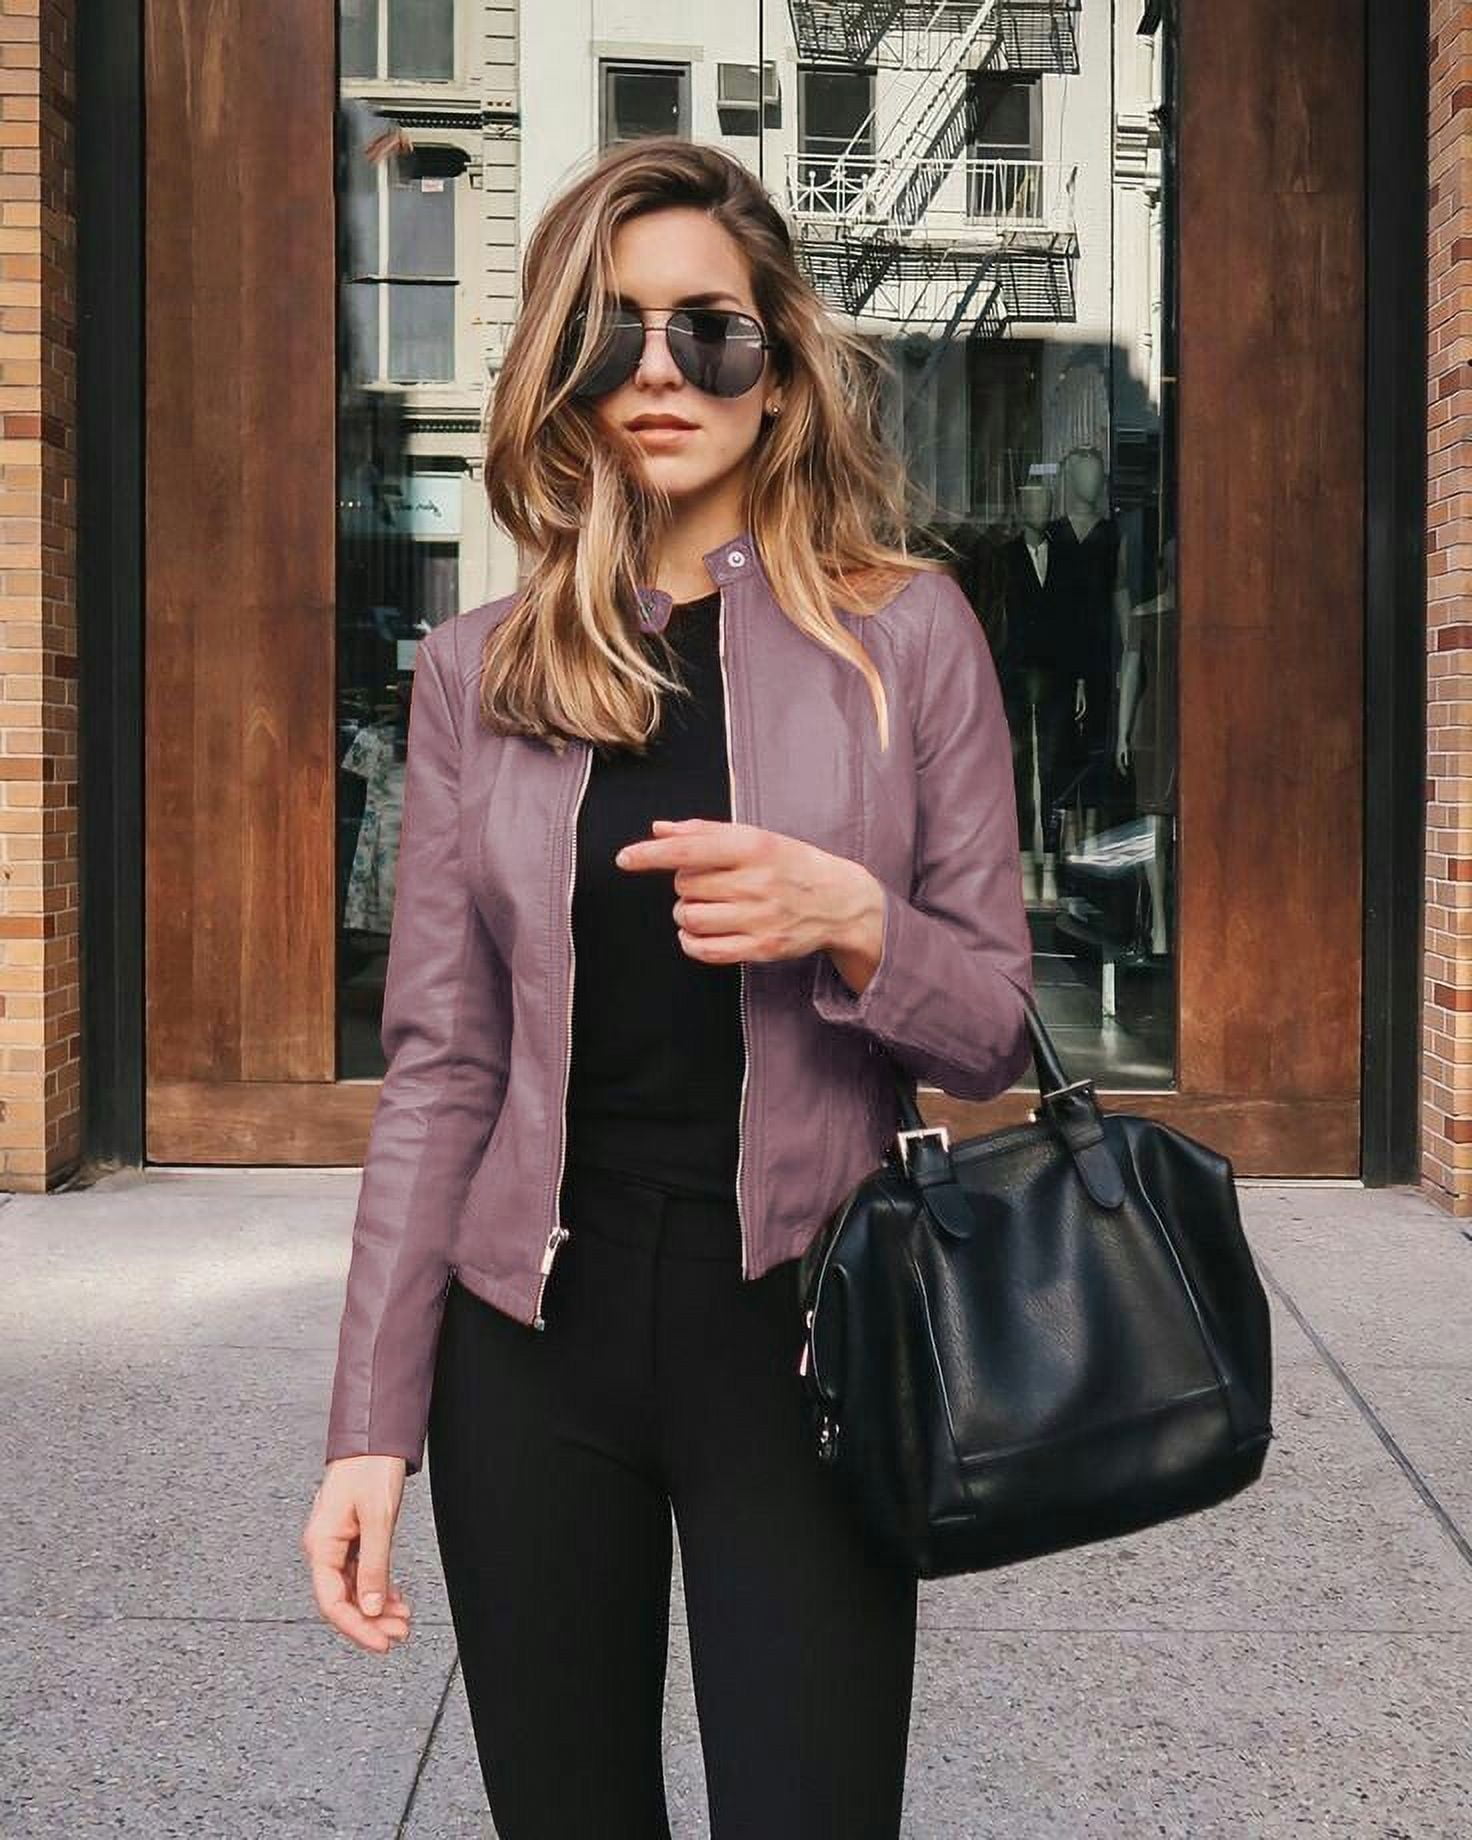 BESTSPR Women's Suit Collar Imitation Leather Slim-Fitting Street